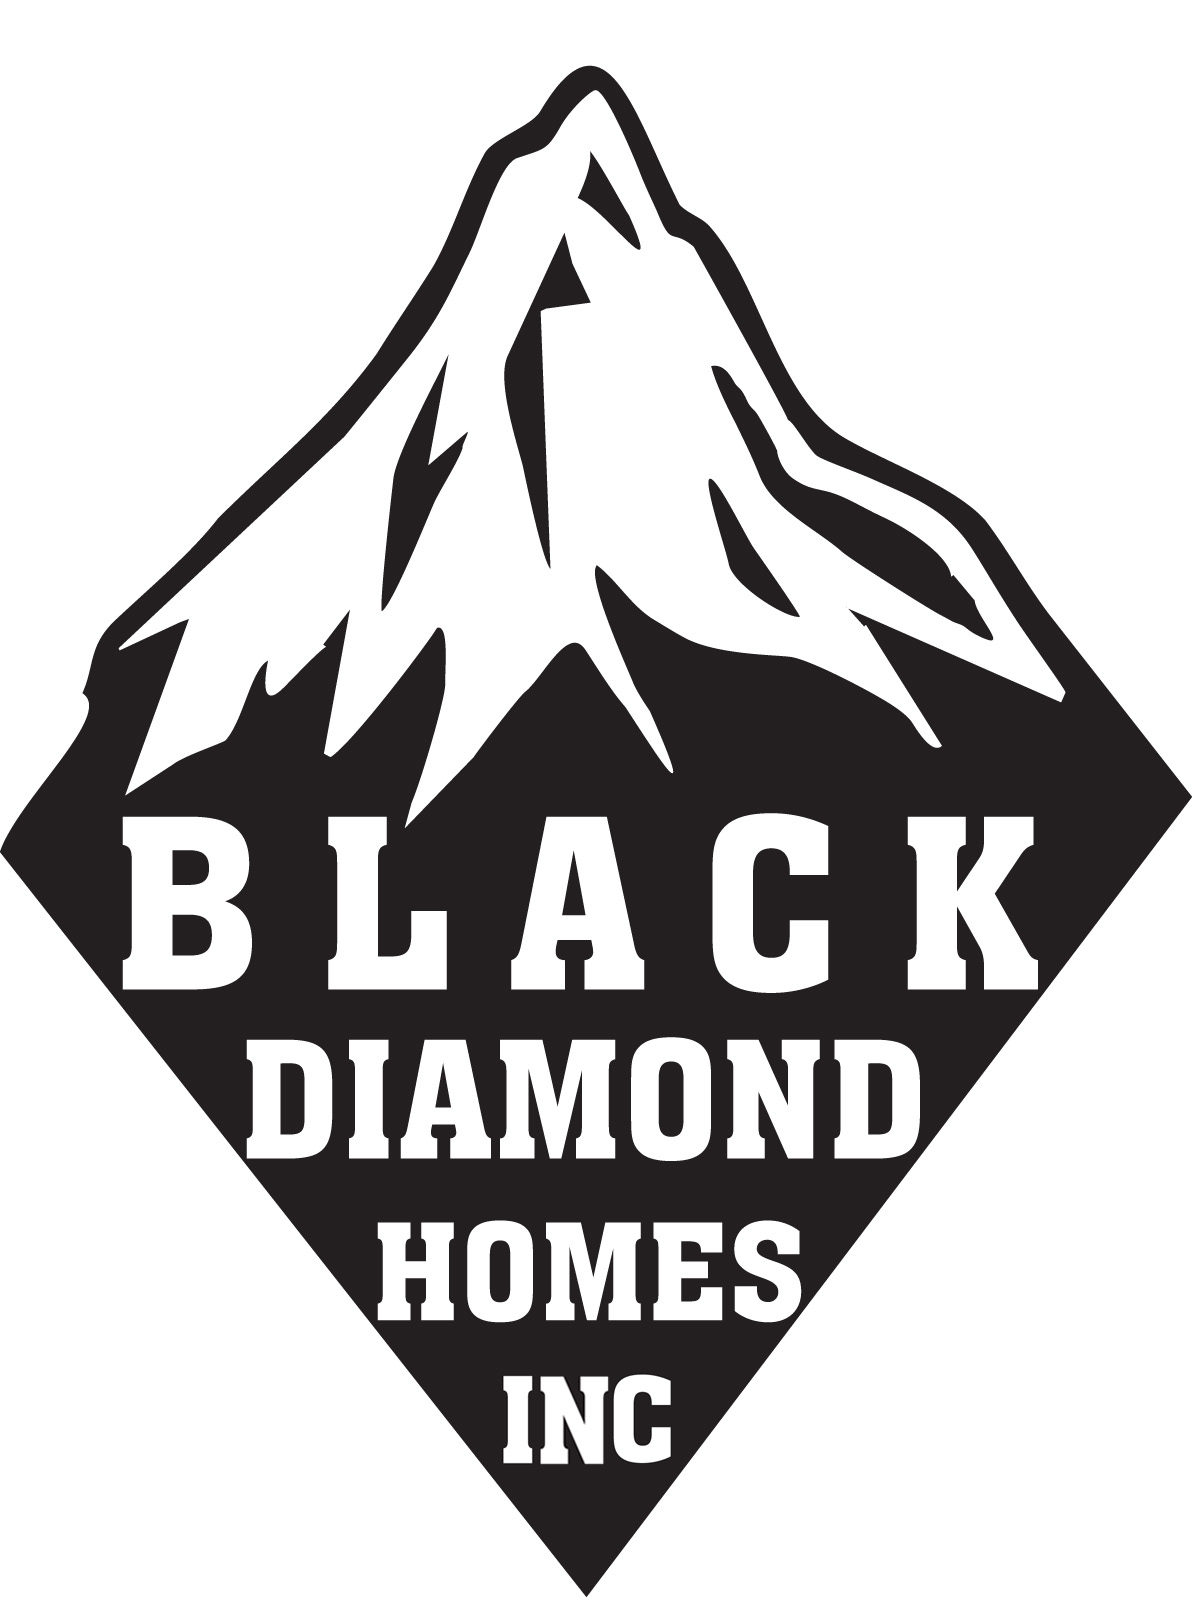 Black Diamond Homes logo or portrait image